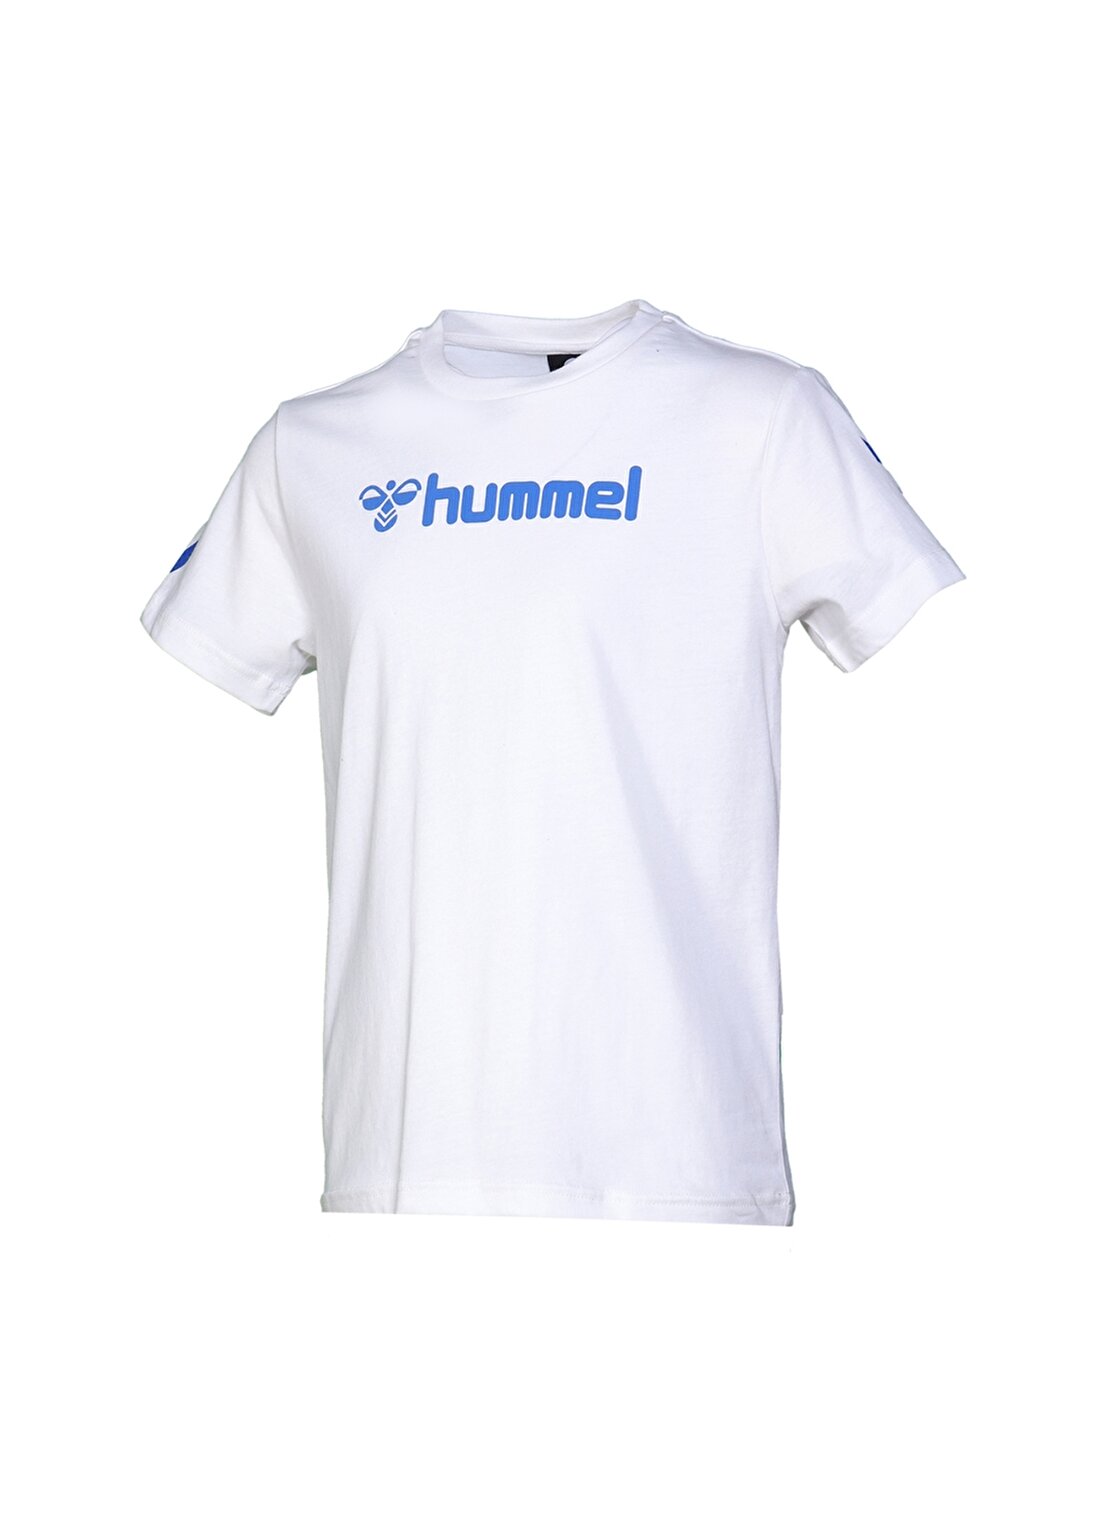 Hummel 911157-9973 Beyaz Erkek Çocuk T-Shirt